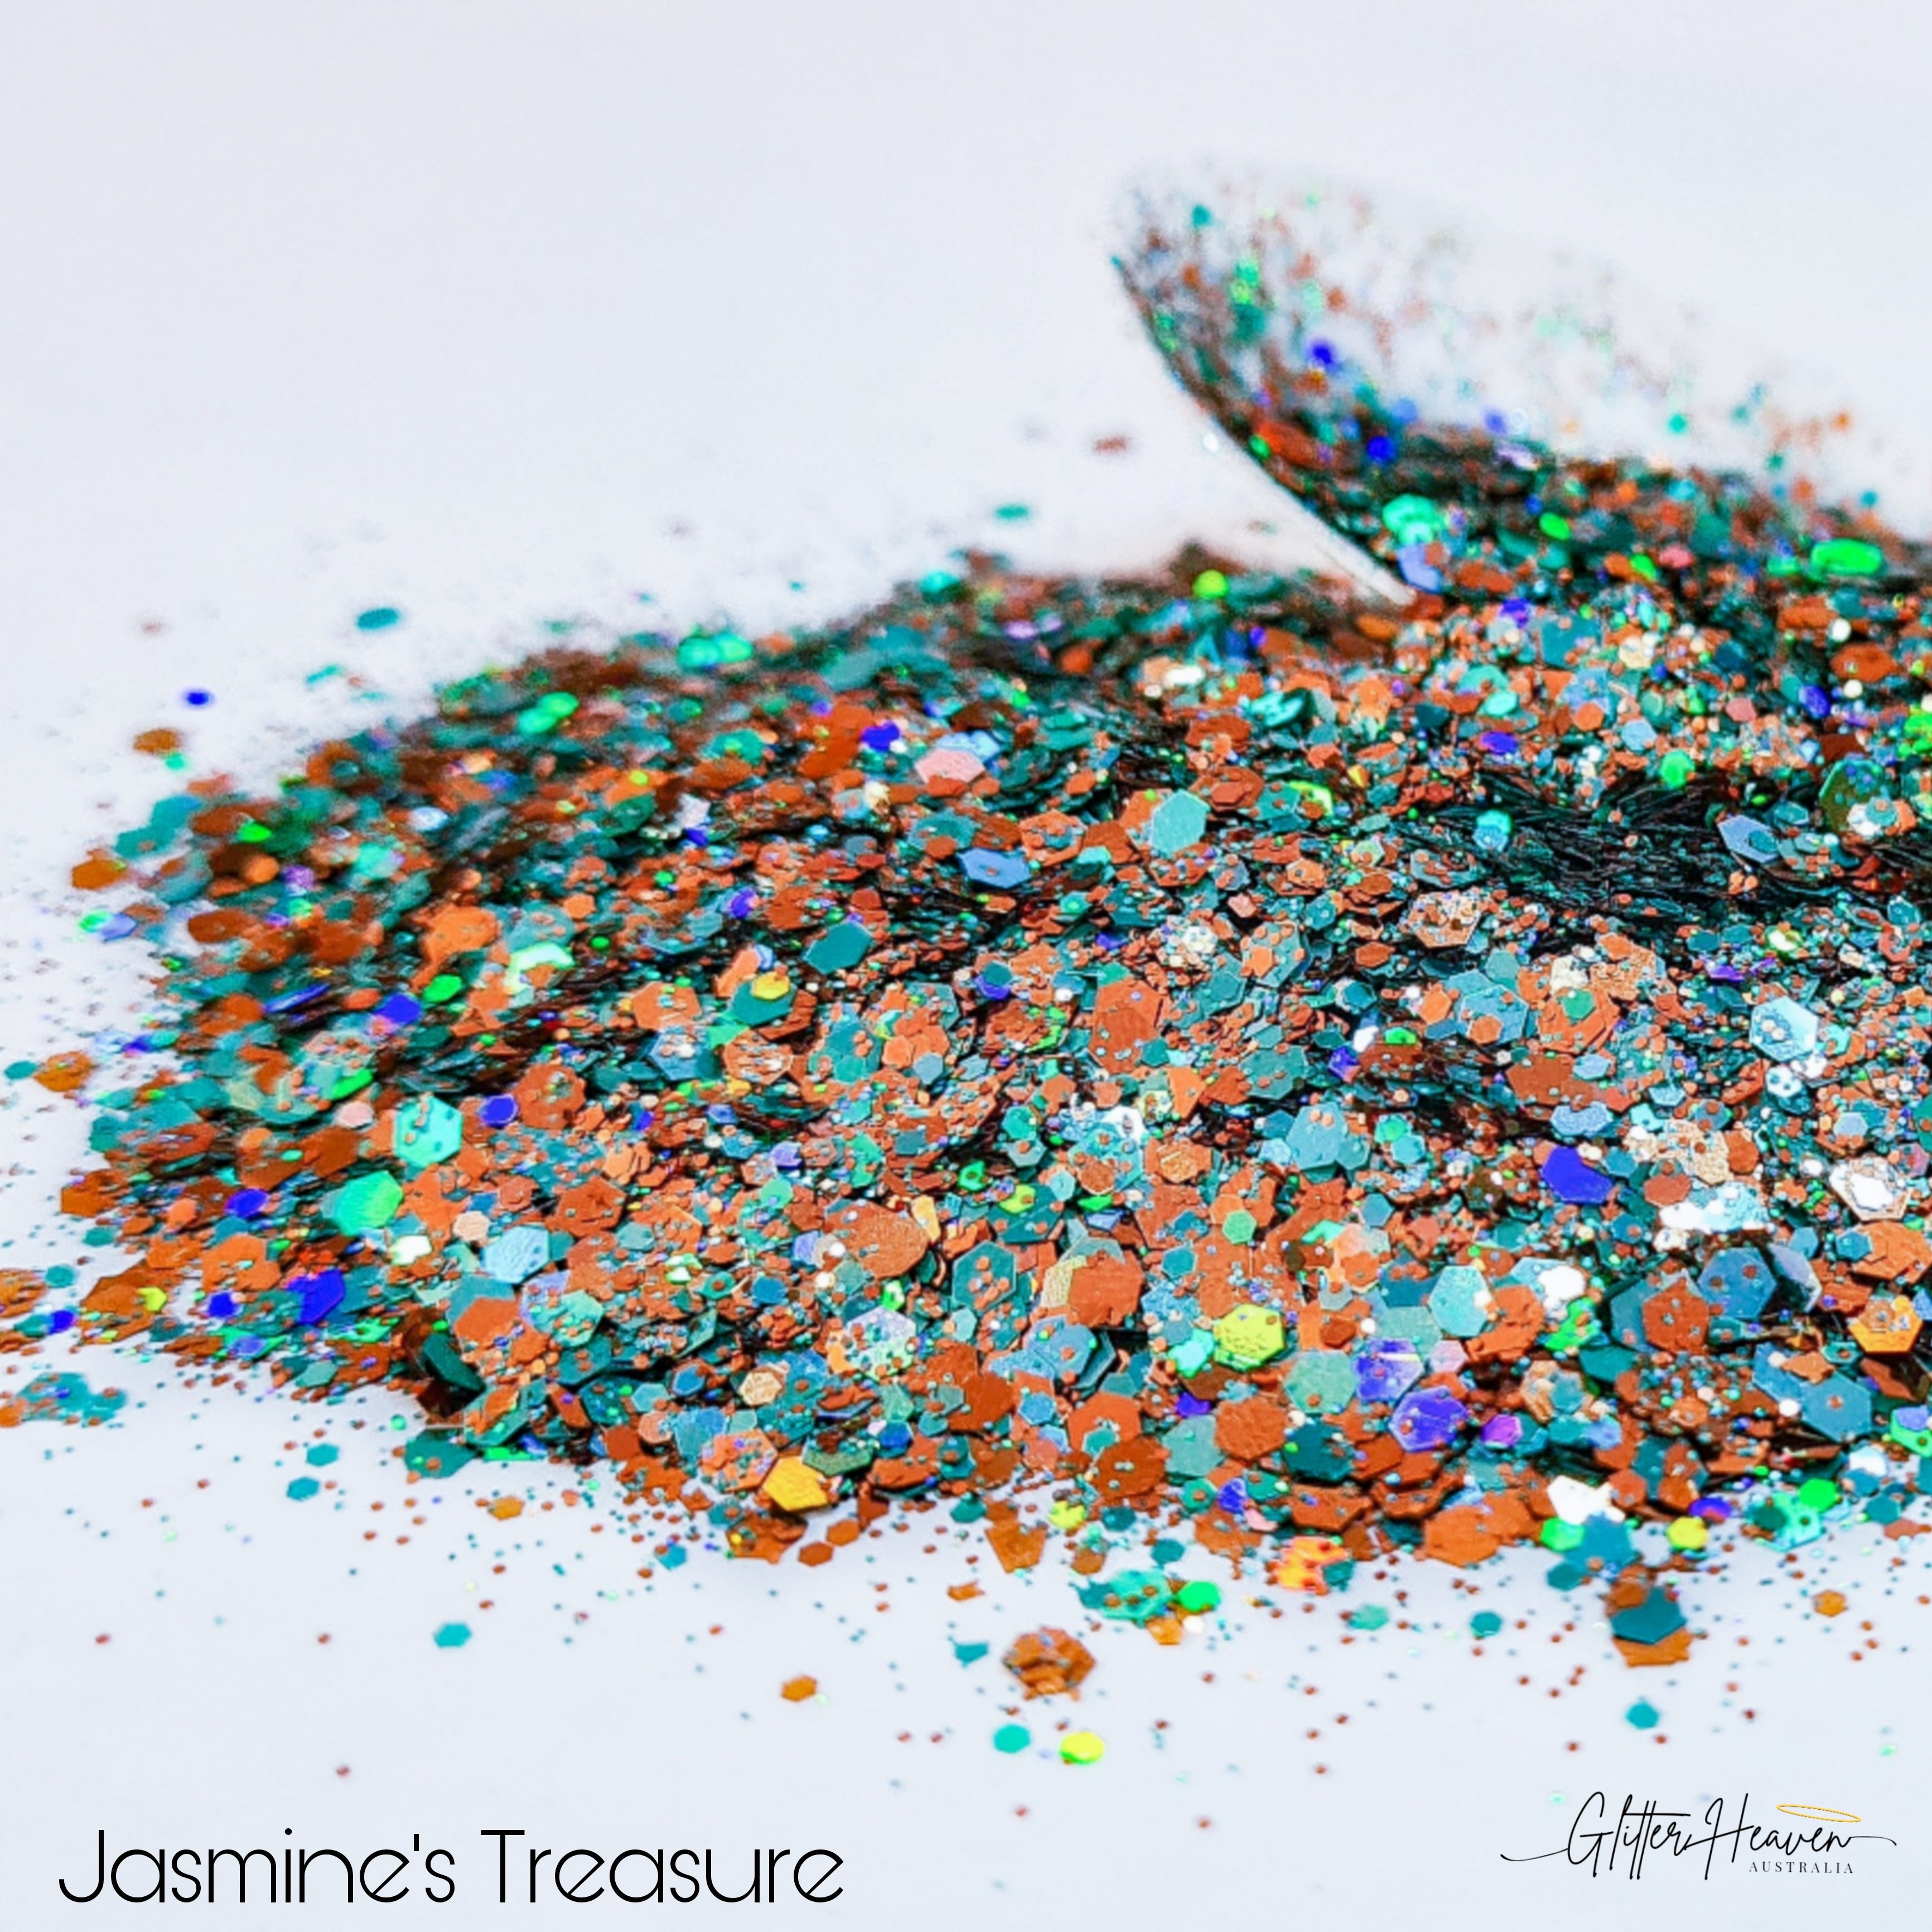 Jasmine's Treasure